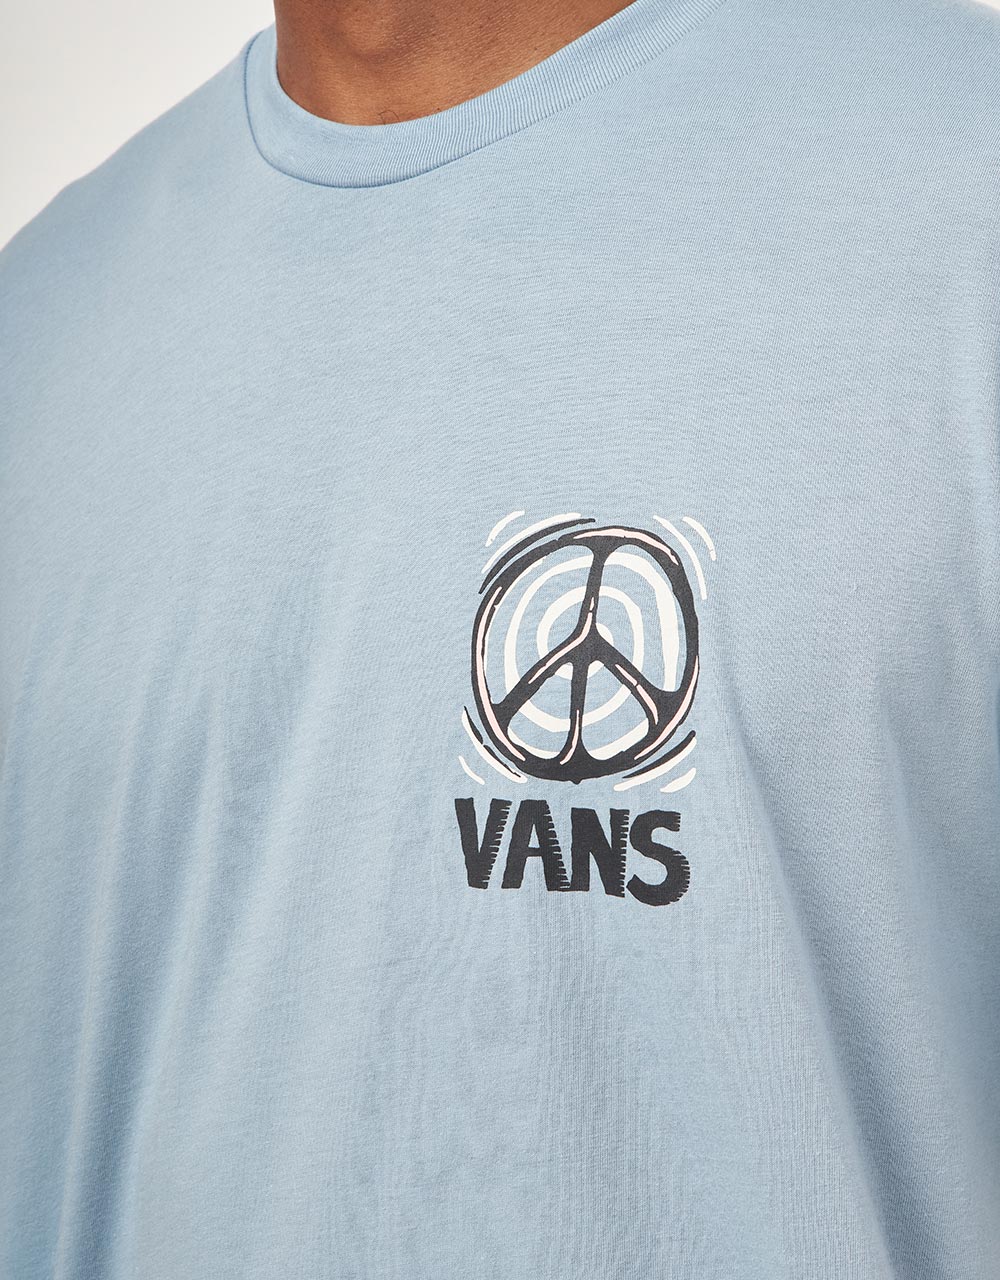 Vans Sunbaked T-Shirt - Dusty Blue